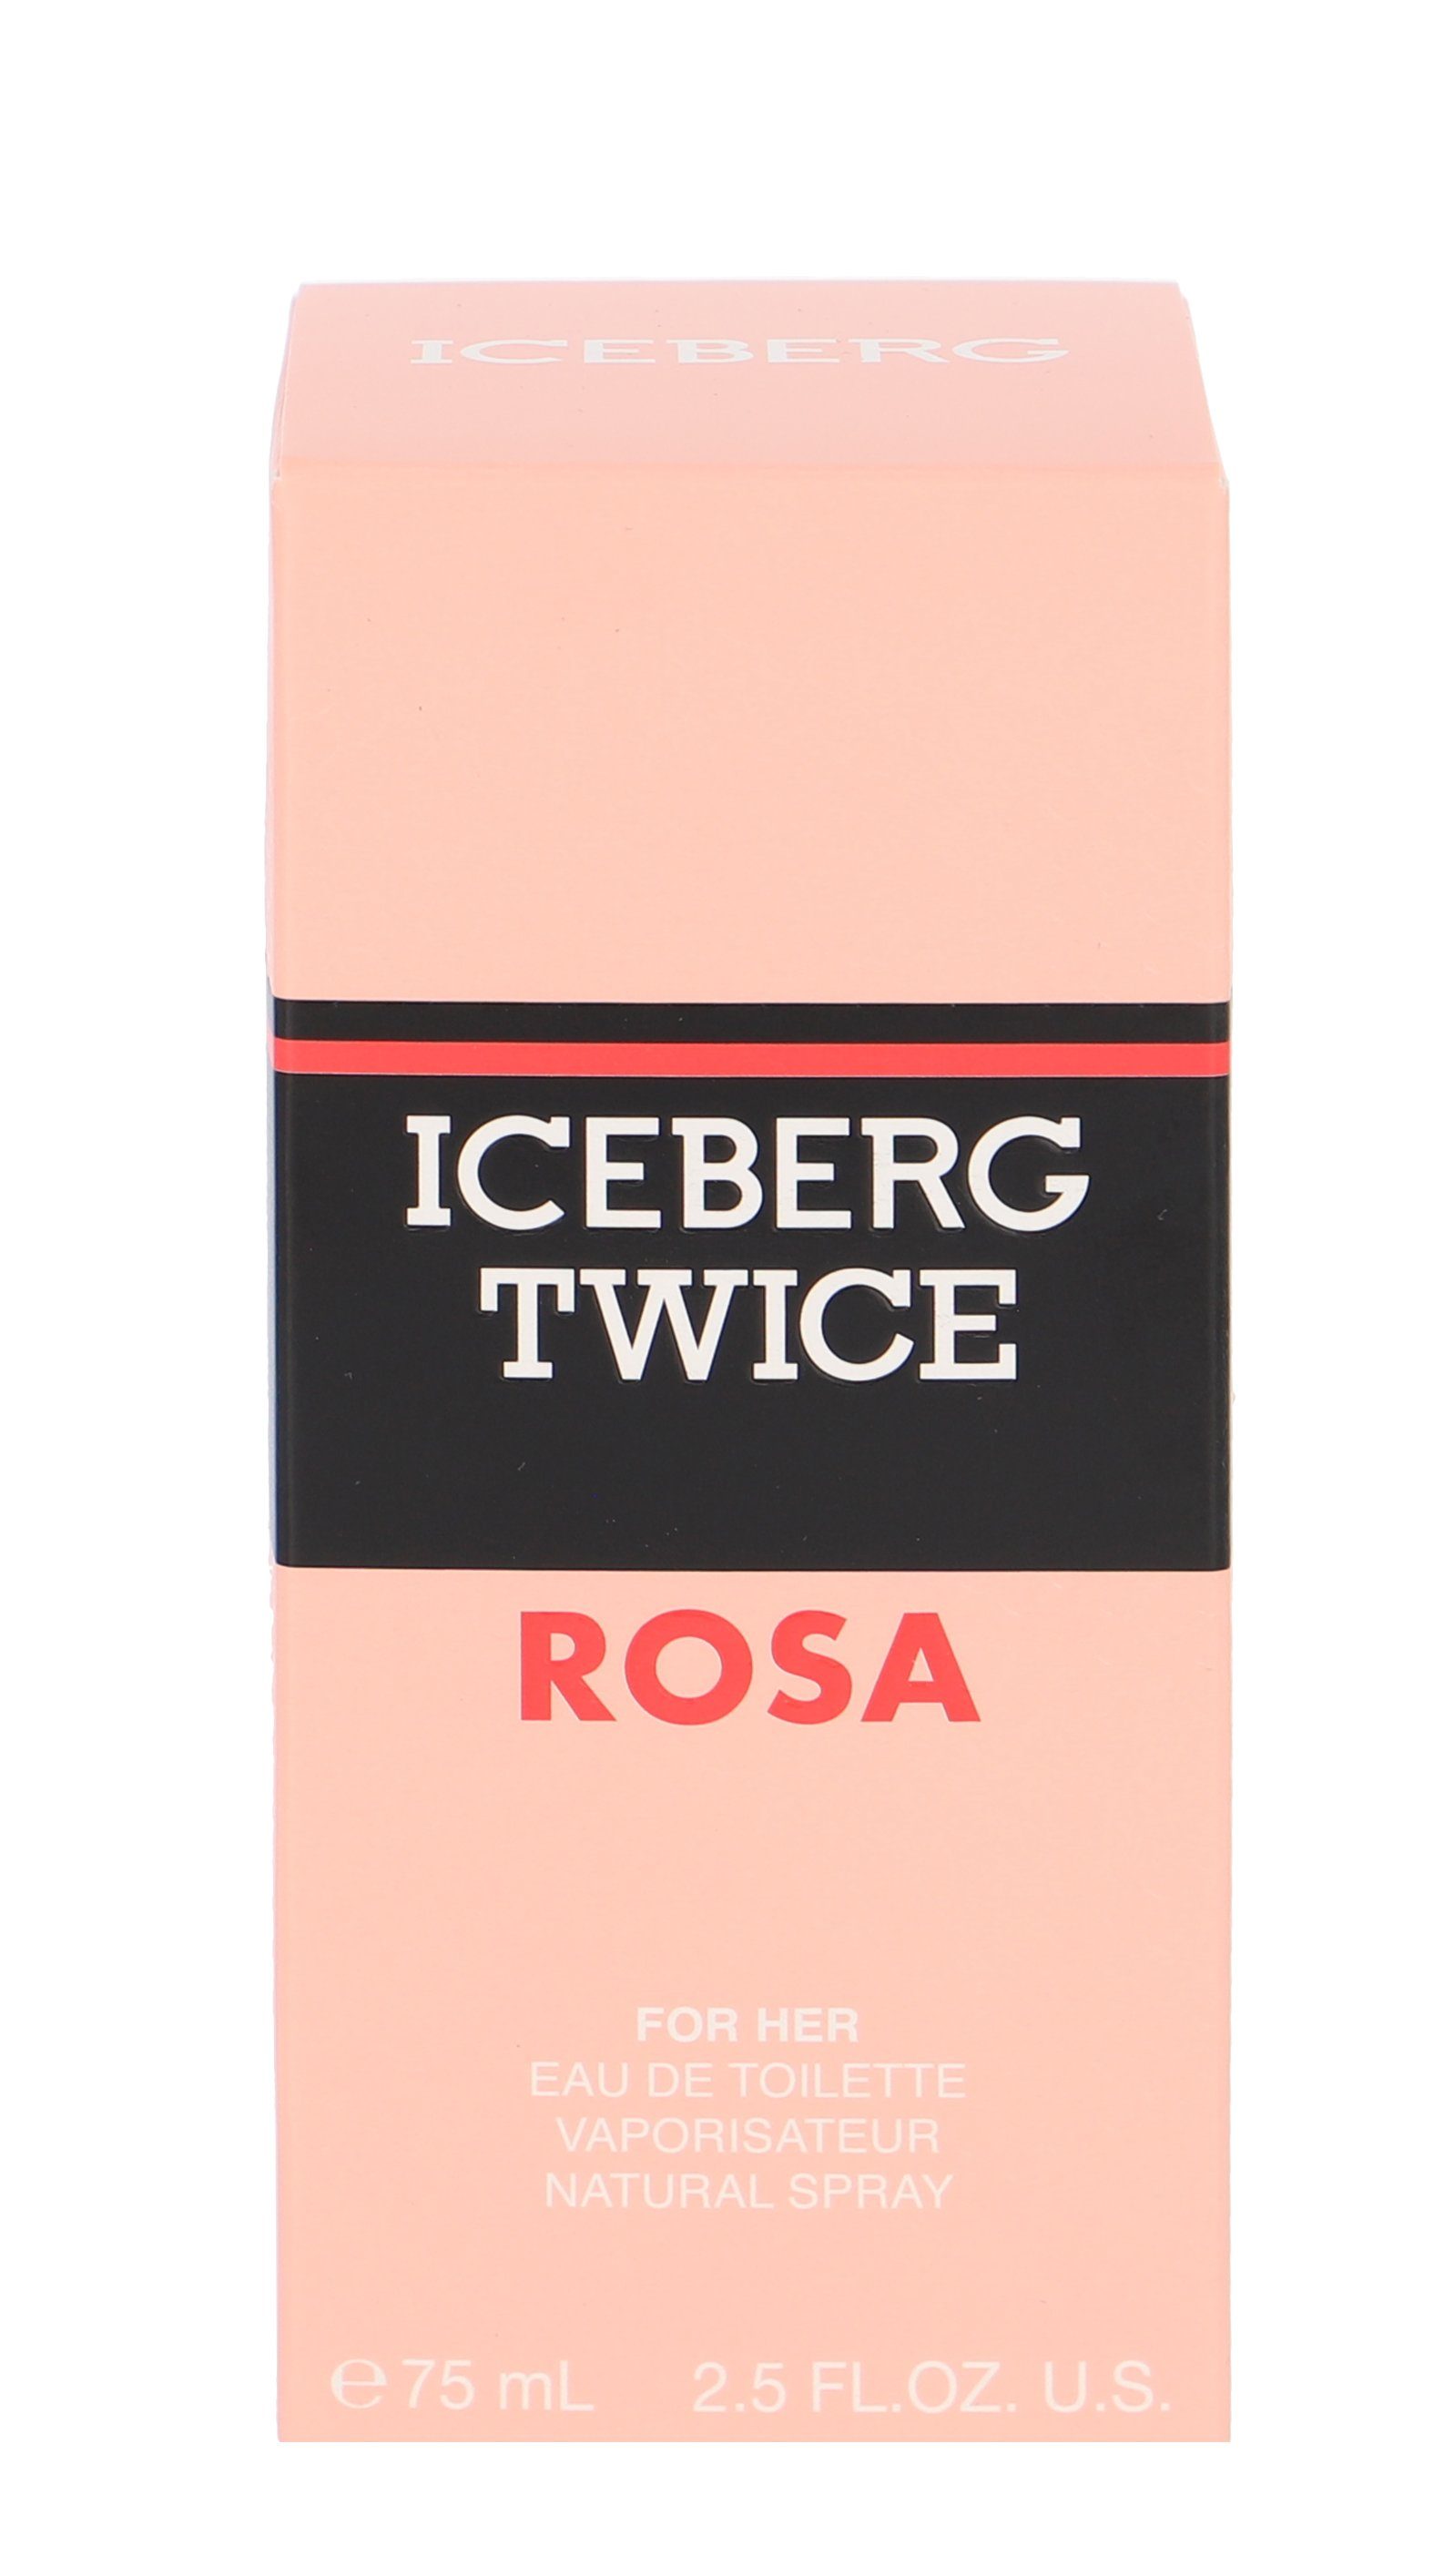 ICEBERG Eau Toilette de Rosa Femme Twice